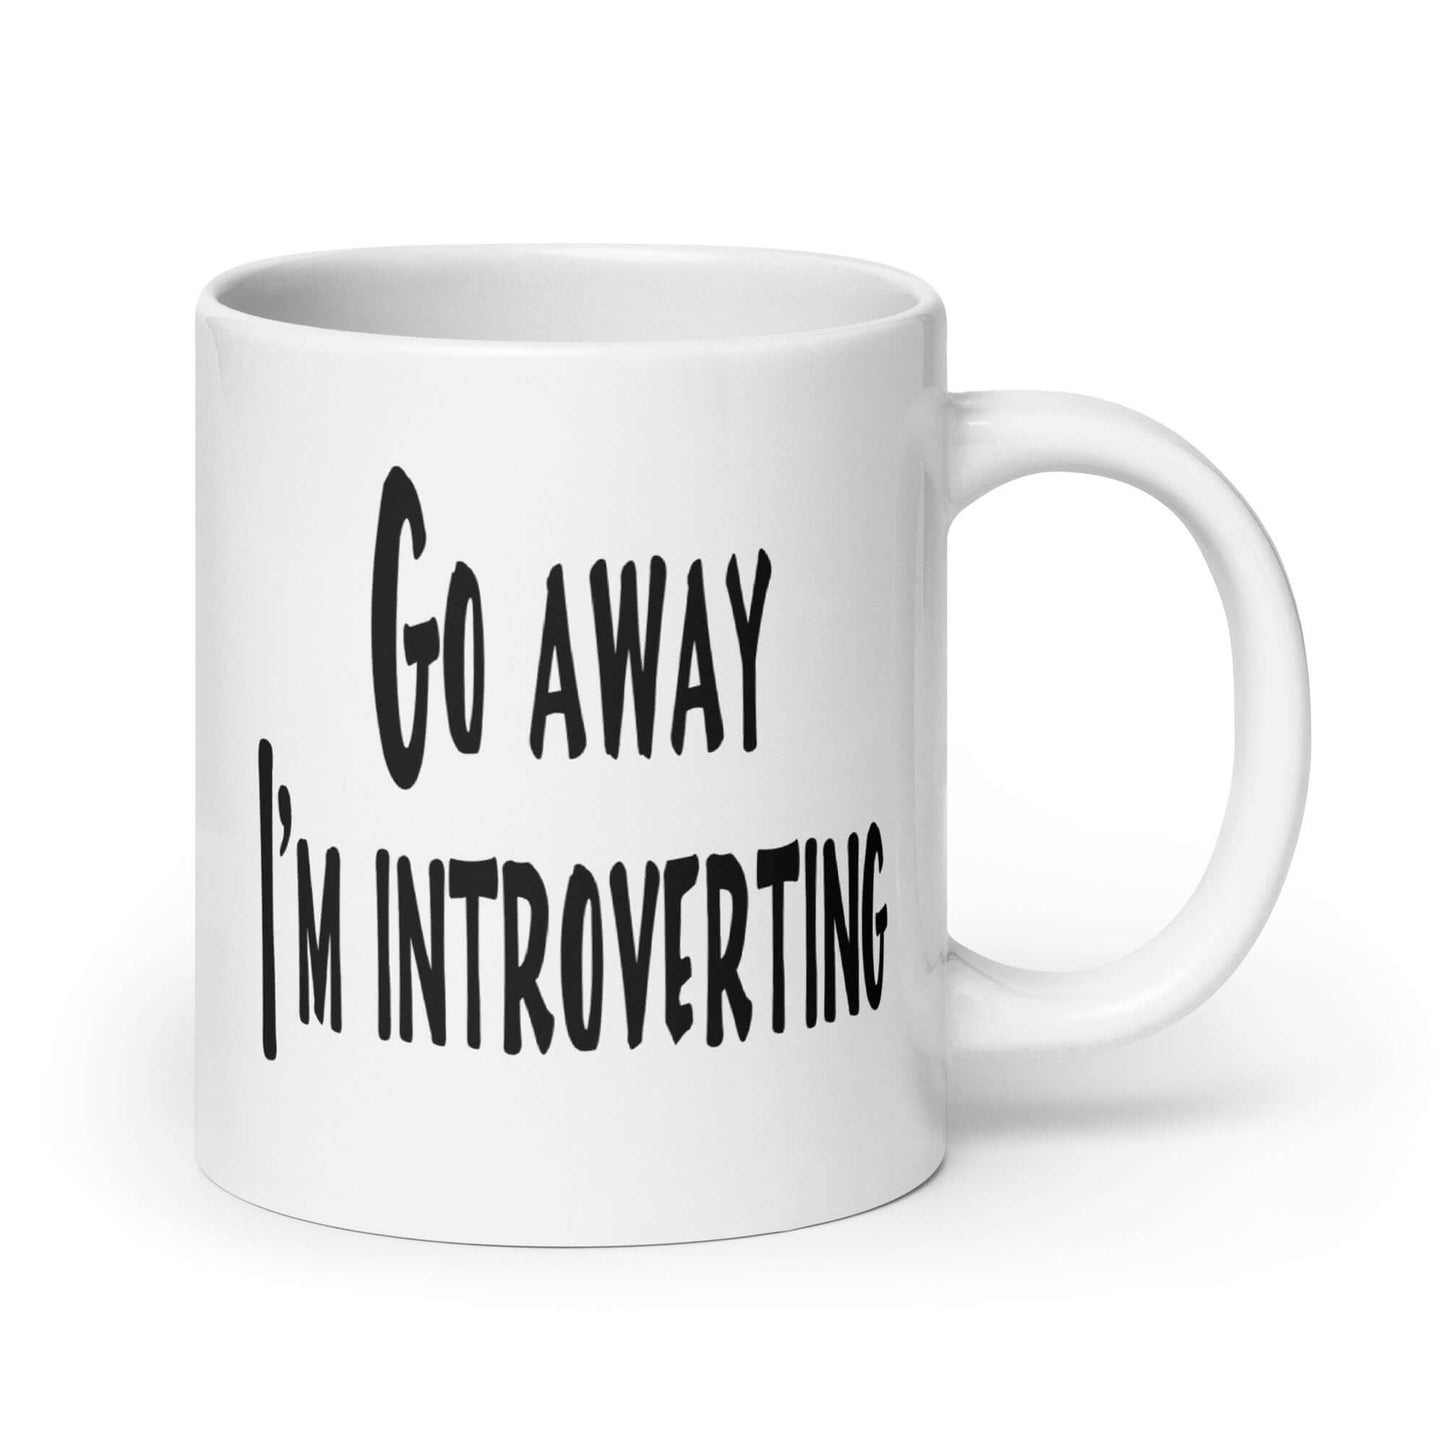 Go away I'm introverting mug